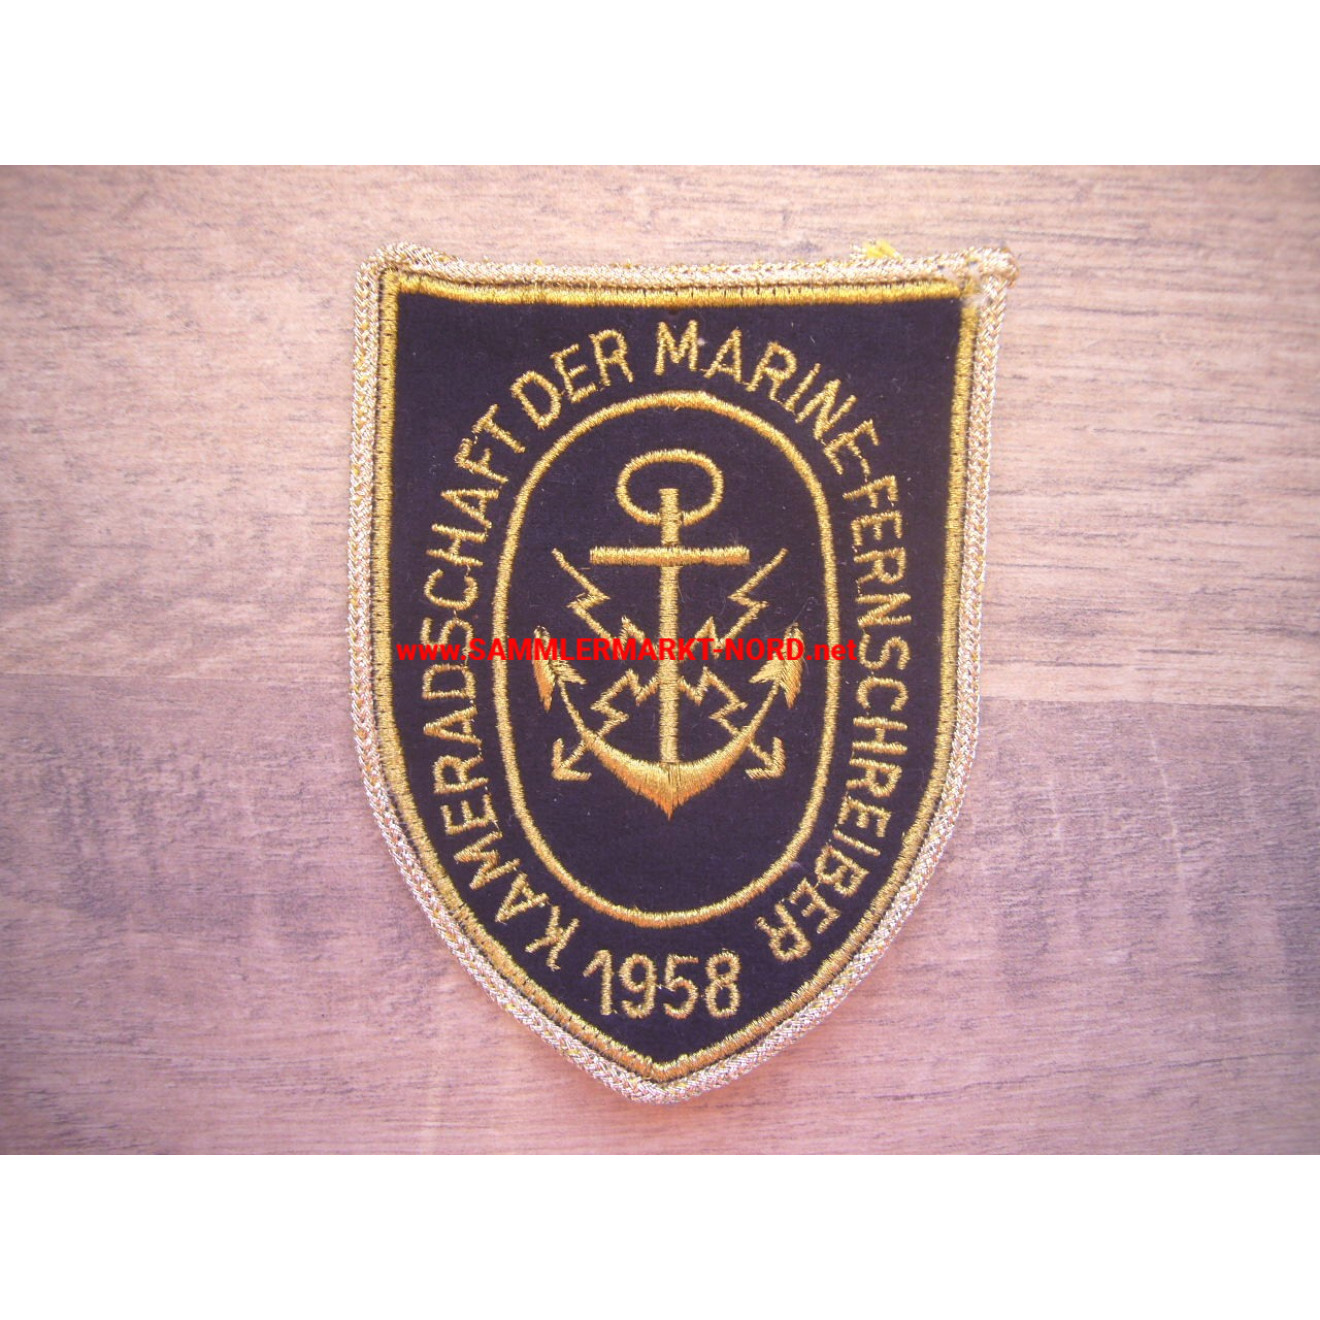 Comradeship of the naval telegraphers 1958 - Uniform badge